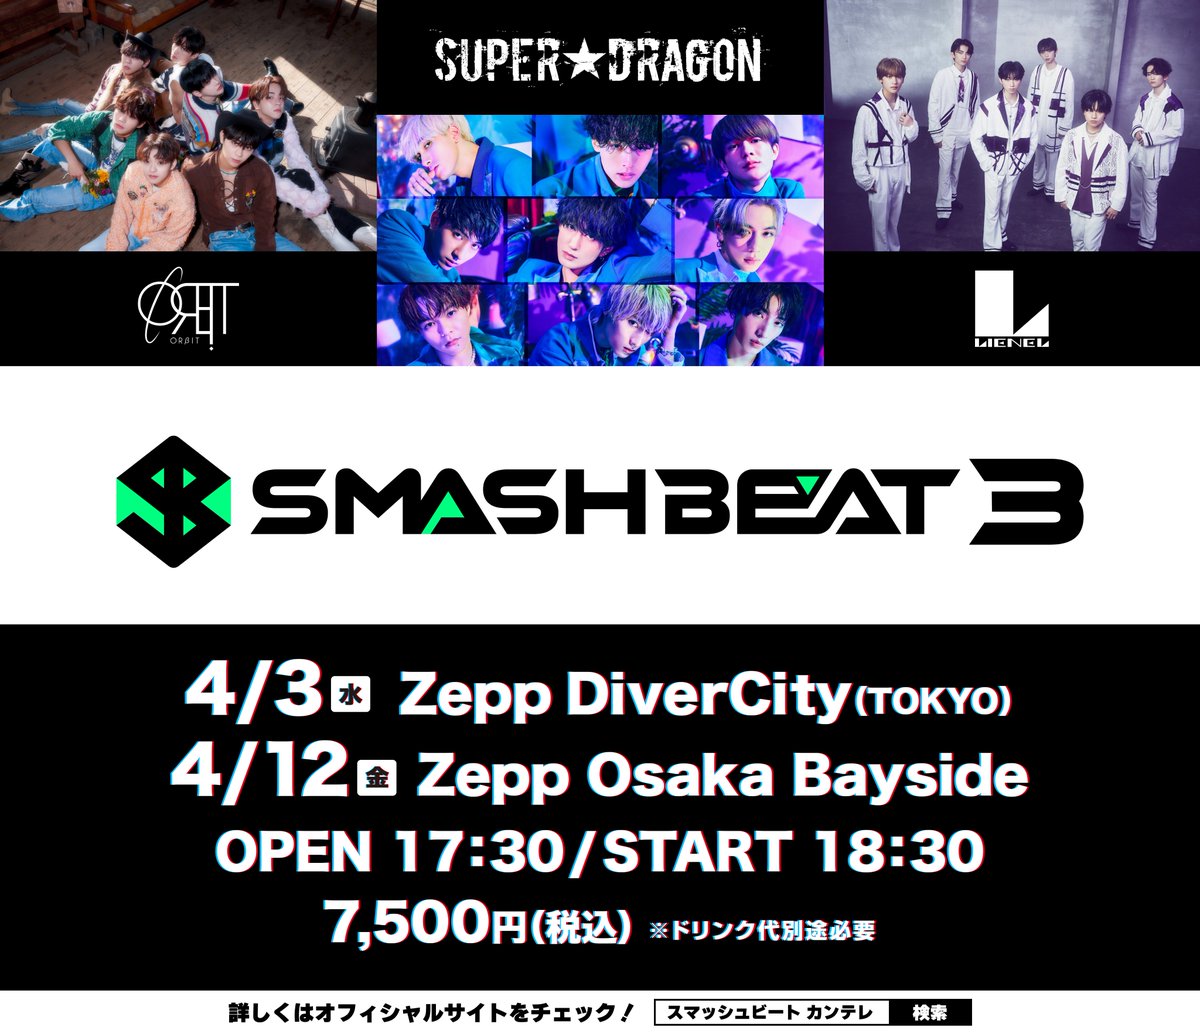 『#newsランナー🏃🏻』
本日夕方５時台 #ランナーマガジン📺

４月に東京＆大阪で開催⚡️
ダンスボーカルがテーマの音楽イベント
「#SMASHBEAT 3」をご紹介💕

出演する #ORβIT #SUPERDRAGON #Lienel からSPコメント到着🎤

大阪は4/12（金）Zepp Osaka Baysideで開催です✨

#スマッシュビート
#カンテレ